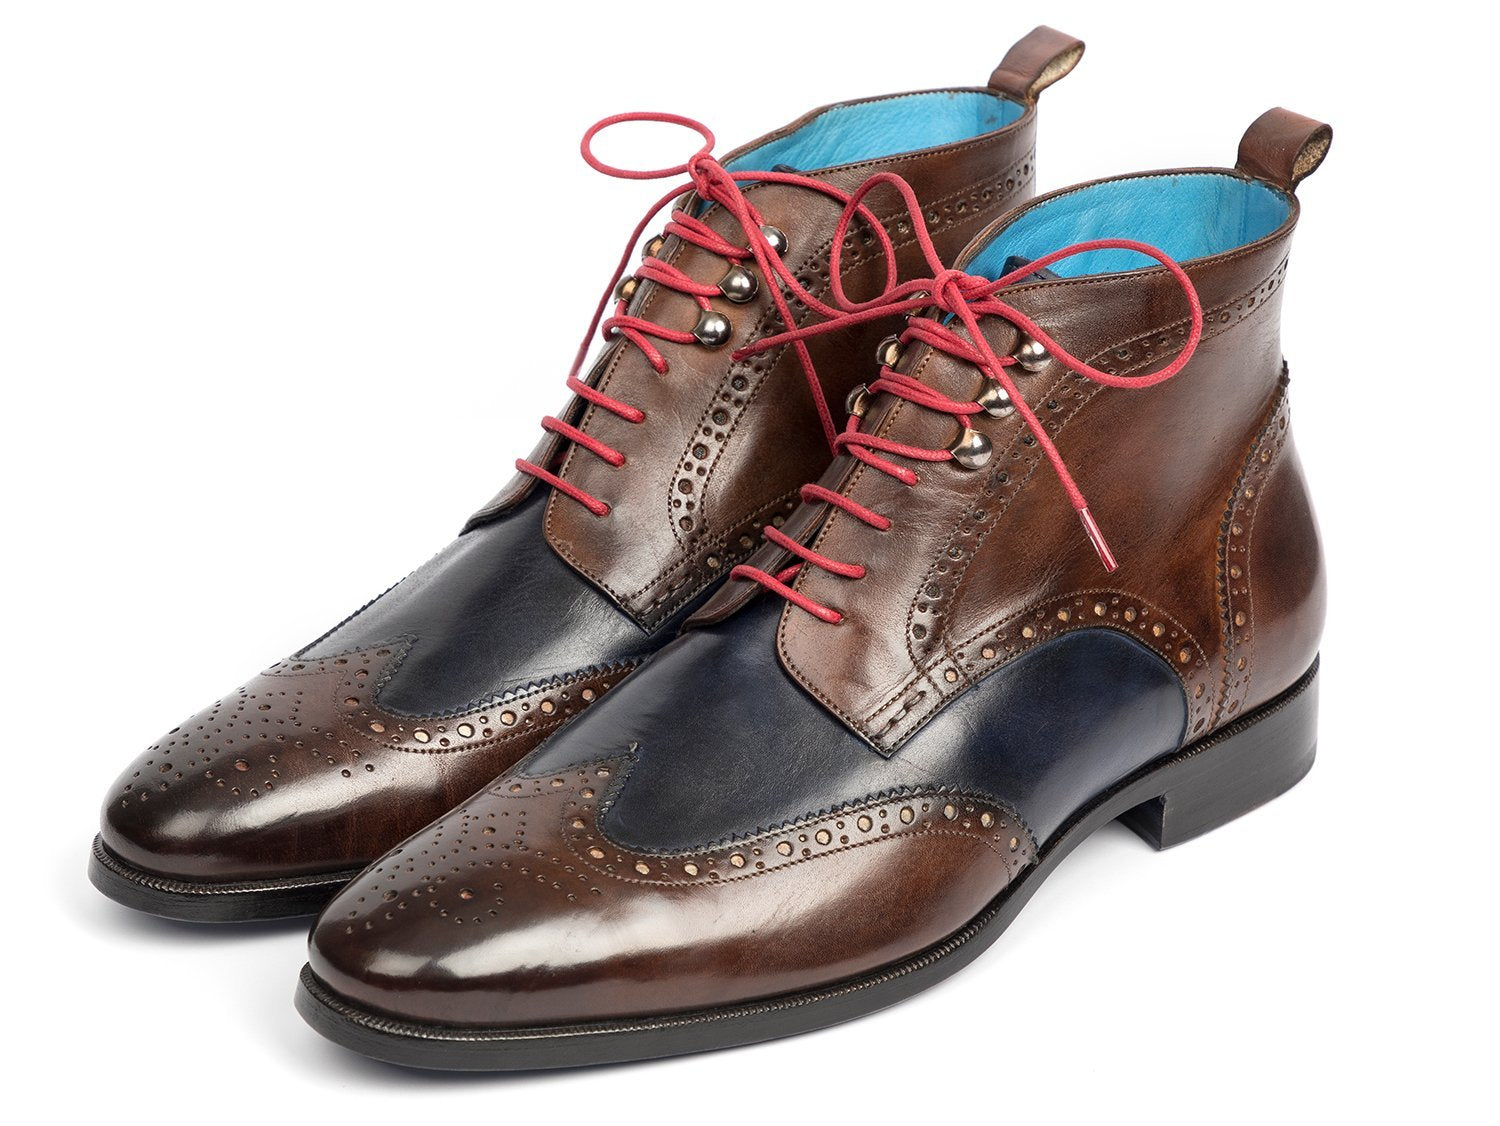 TEEK - Paul Parkman Wingtip Dual Tone Brown & Blue Ankle Boots SHOES theteekdotcom   